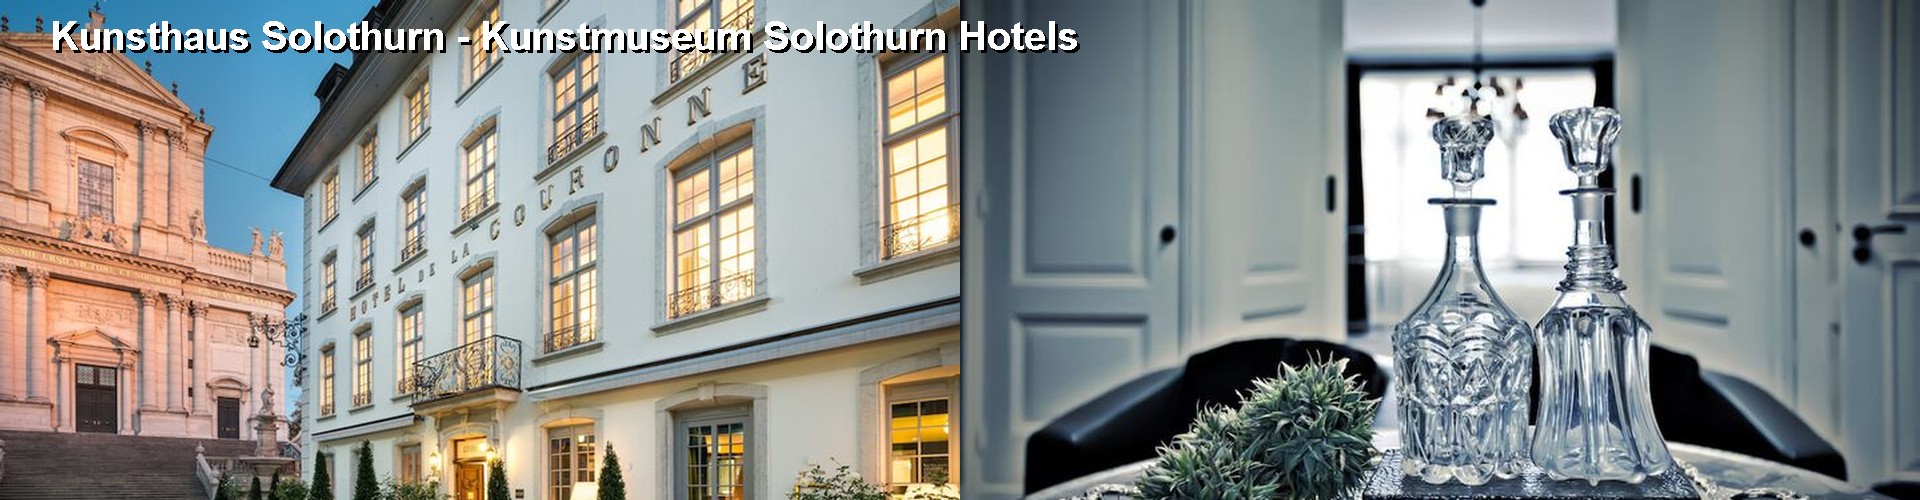 5 Best Hotels near Kunsthaus Solothurn - Kunstmuseum Solothurn